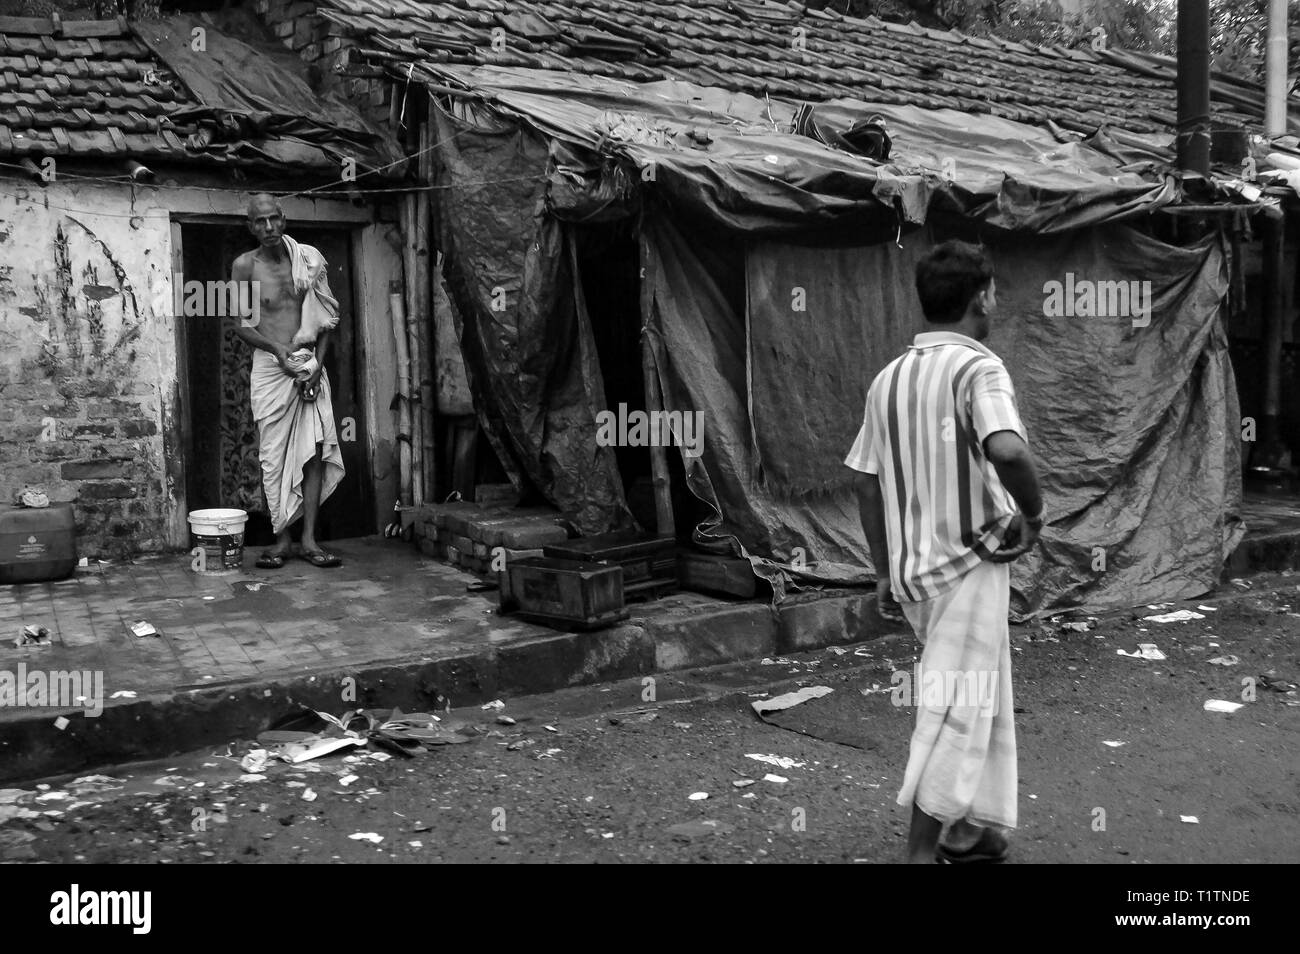 Man living in sidewalk slum bathing from a bucket on the sidewalk in Calcutta, India Stock Photo